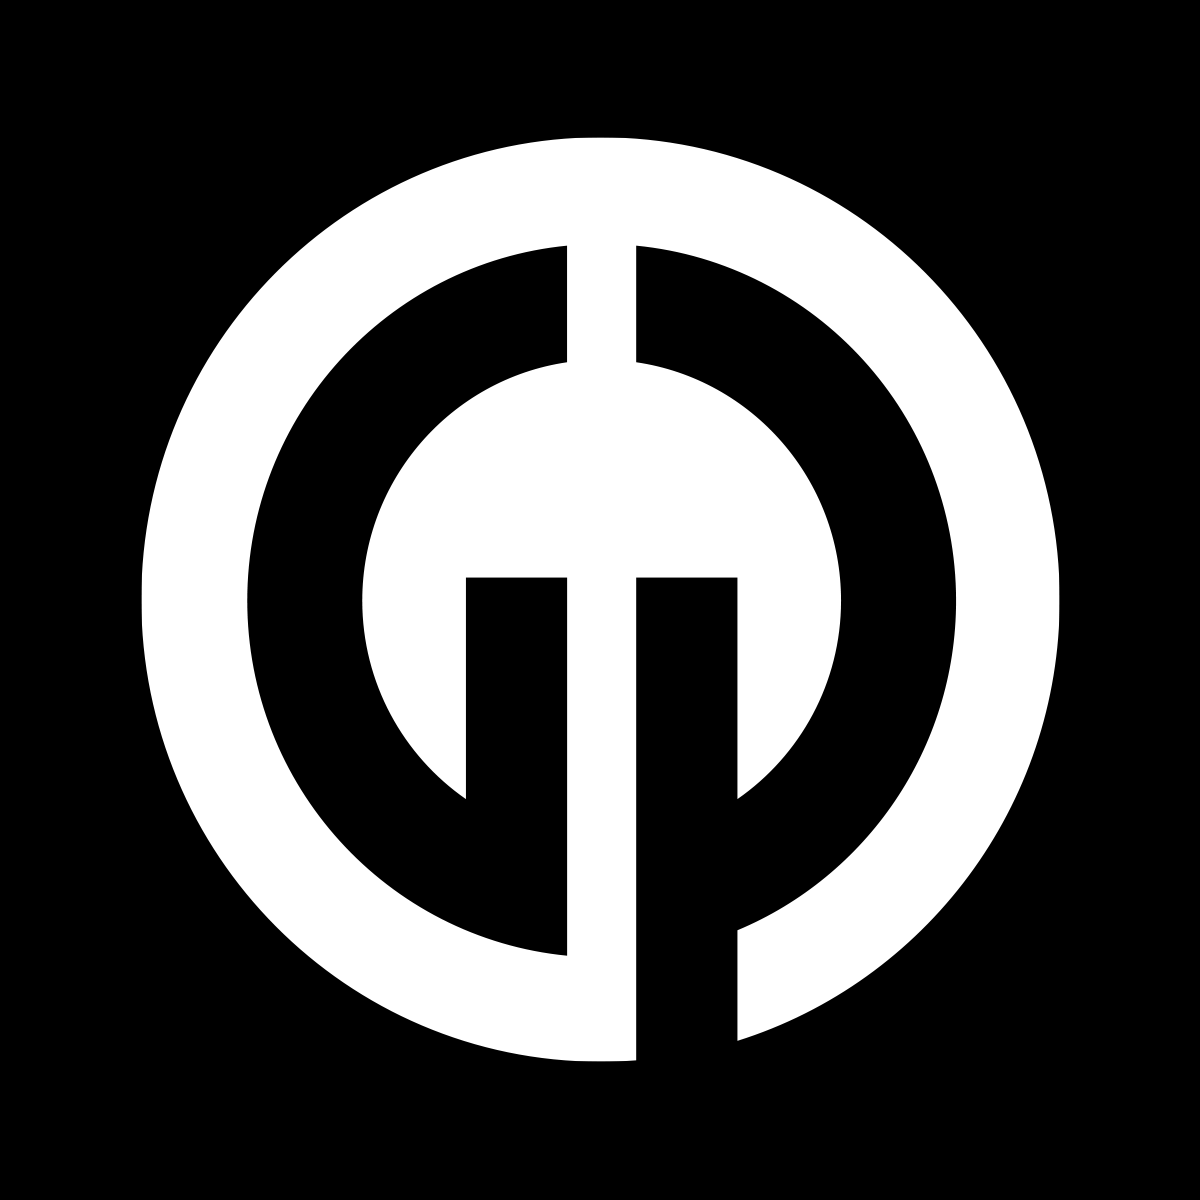 Company logo of Gamesplanet